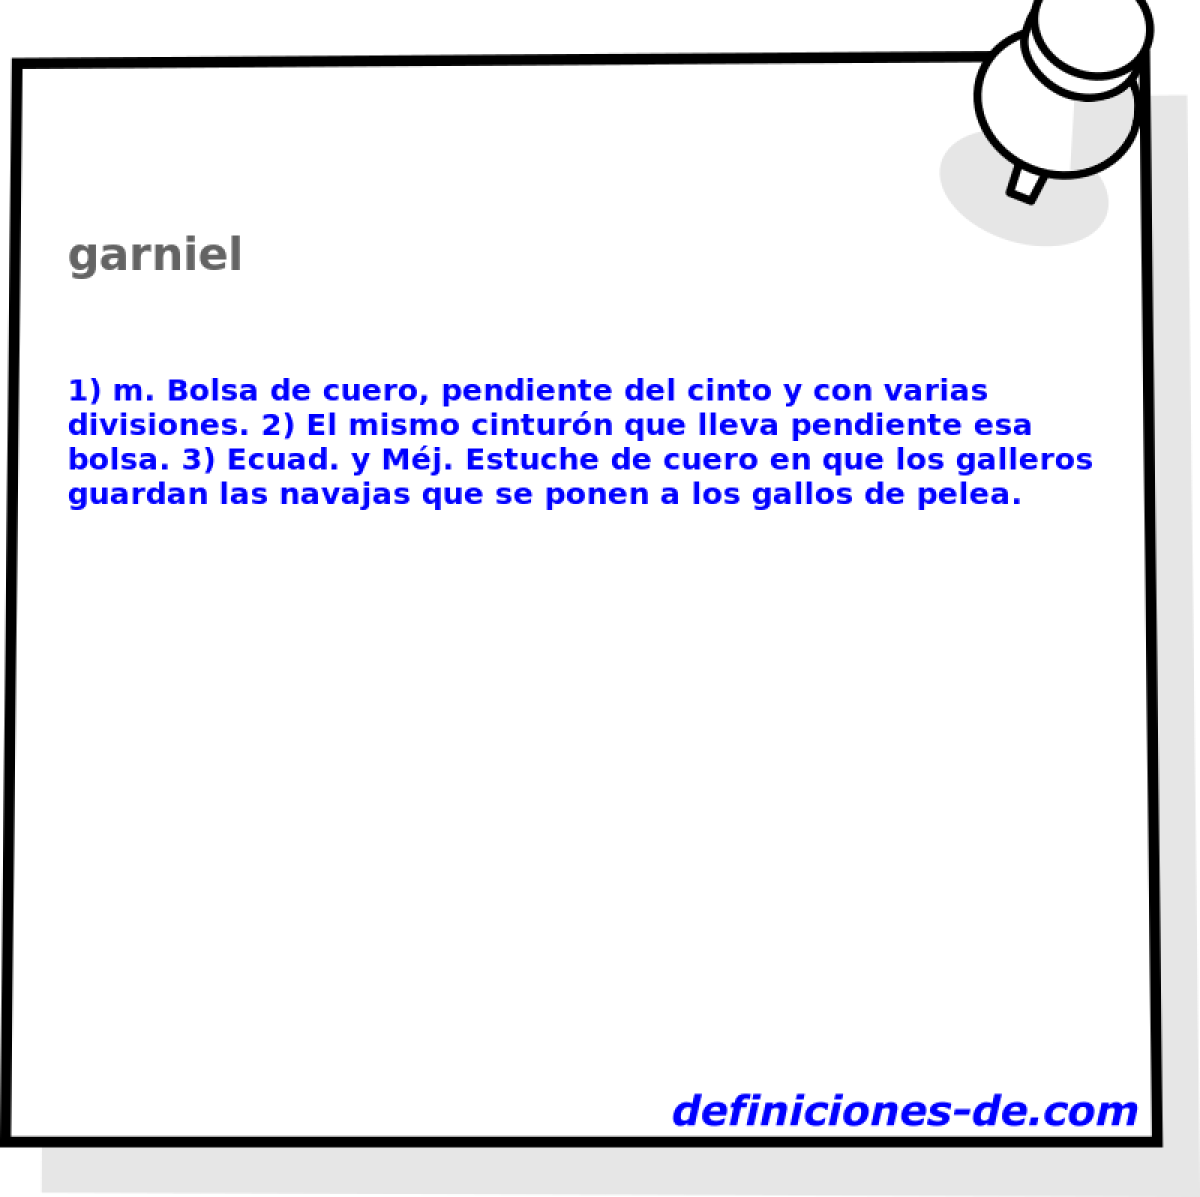 garniel 